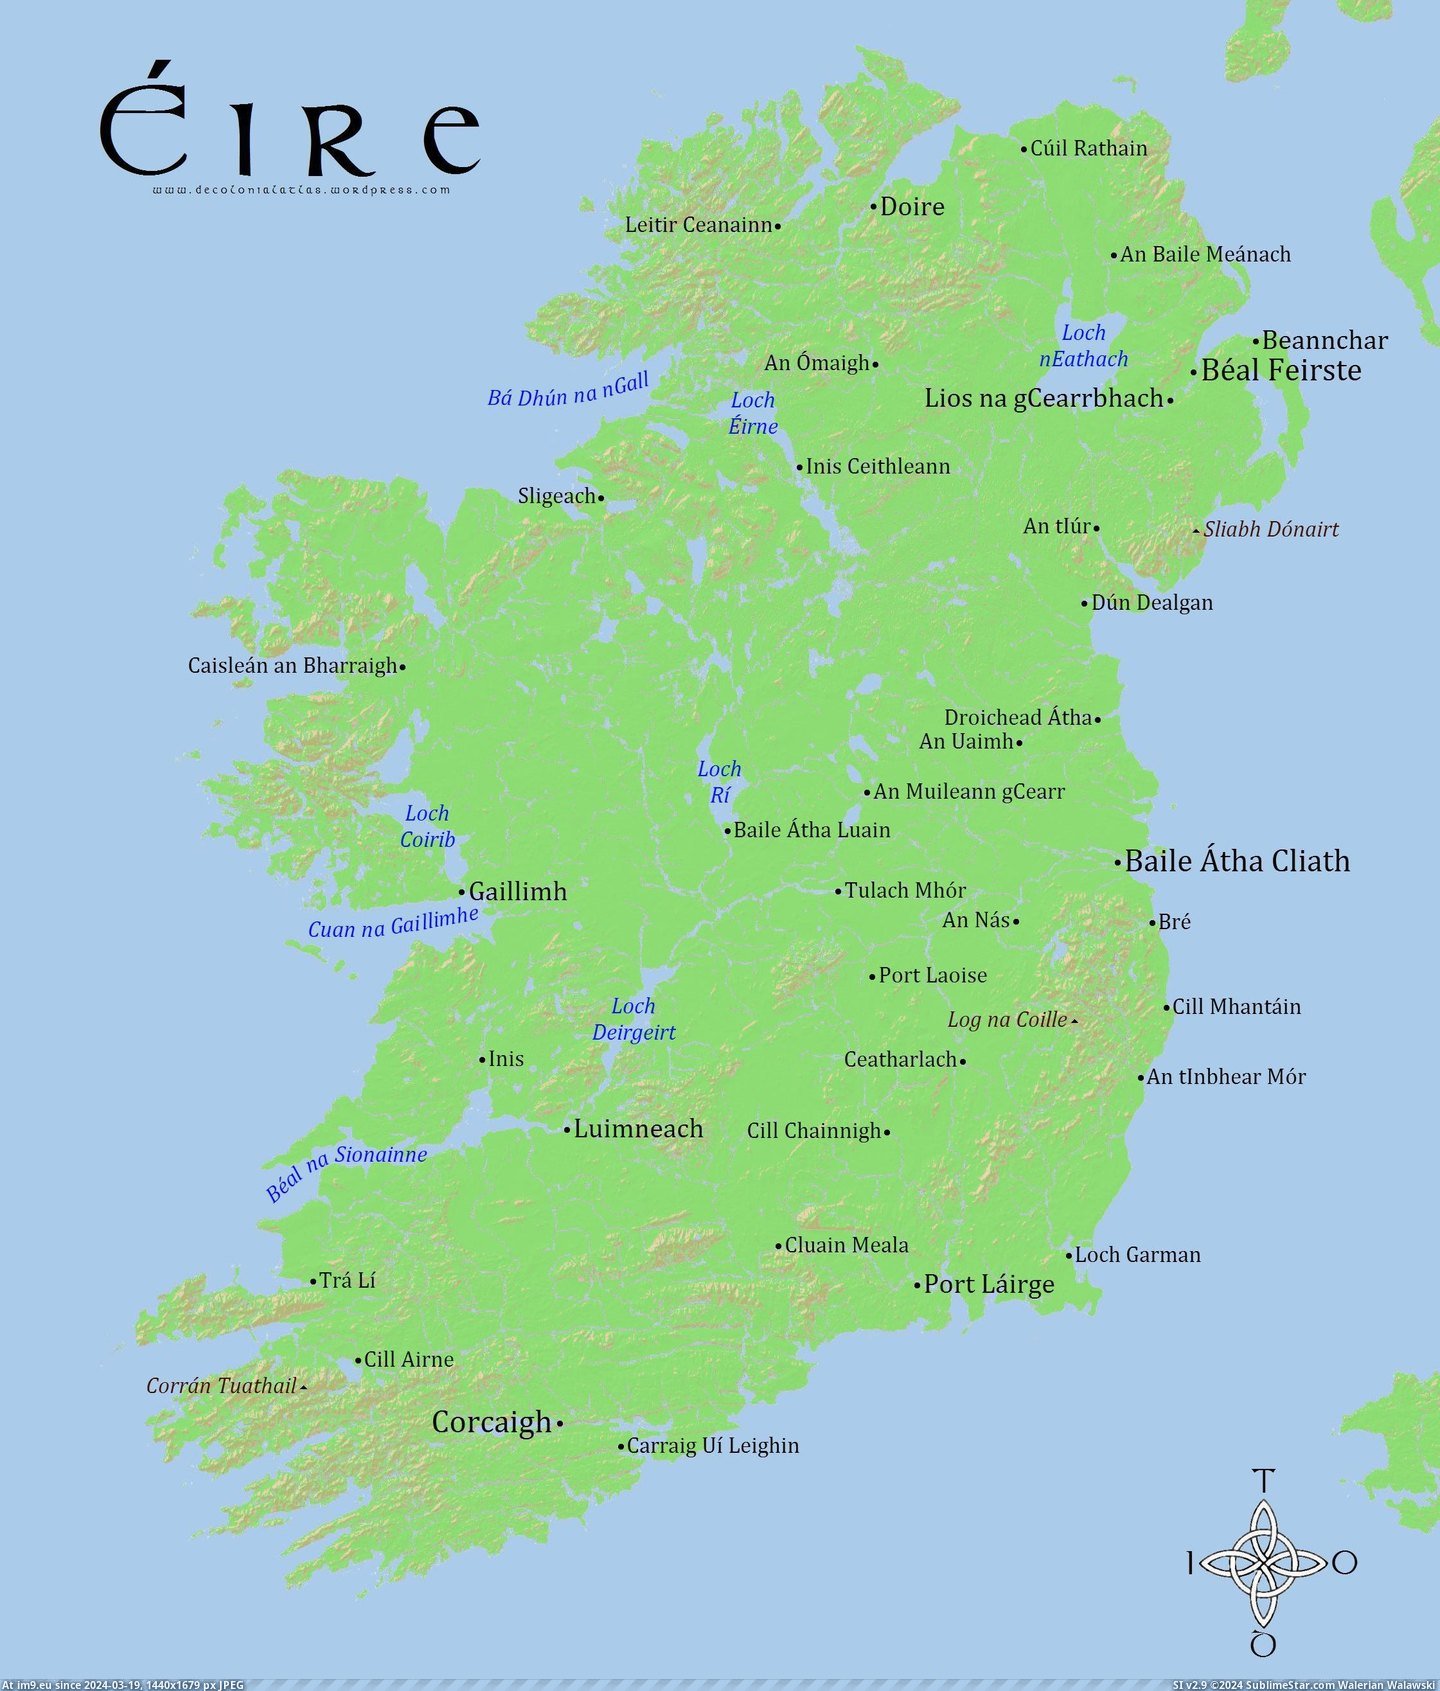 #Ireland #Ire #Irish [Mapporn] Éire (Ireland) in Gaeilge (Irish), Borderless [2240x2625] Pic. (Image of album My r/MAPS favs))